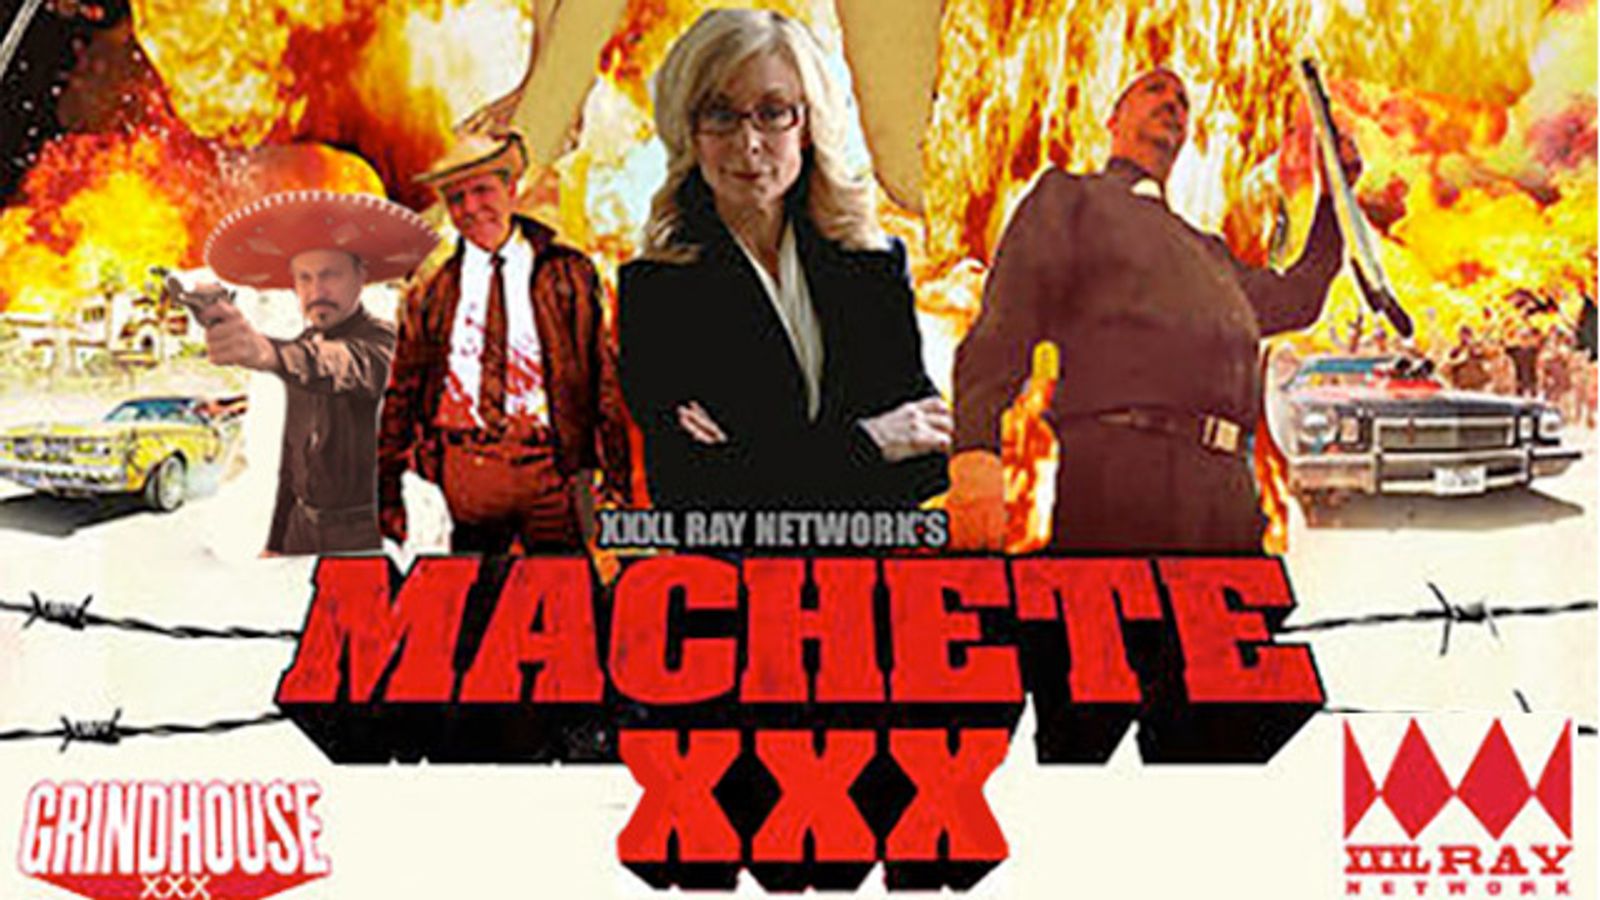 XXXL Ray Network to Release 'Full-Length Trailer' 'Machete XXX'